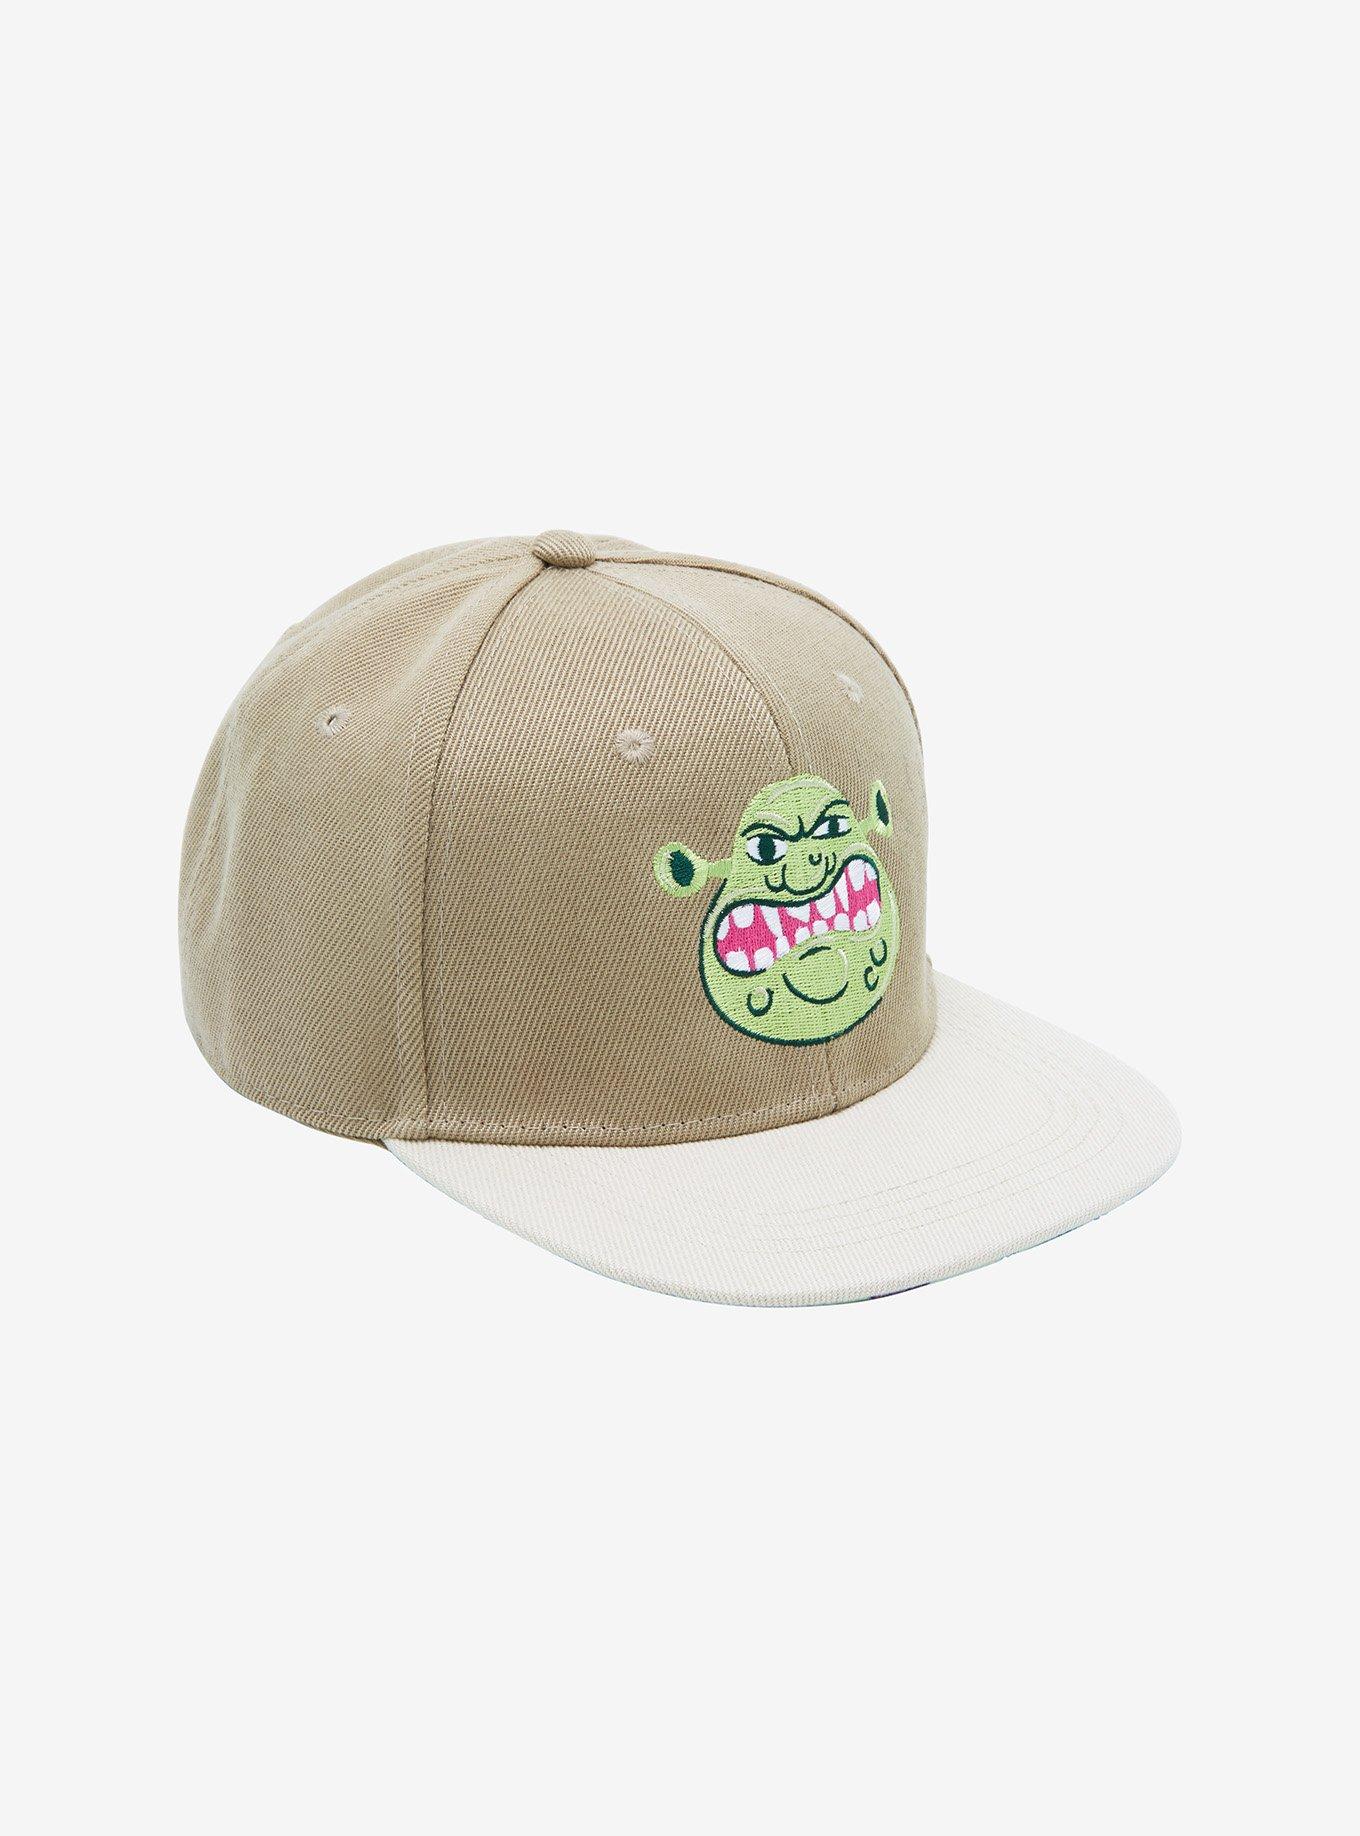 Disney Encanto Girls Licensed Baseball Hat, Multi-Colored with